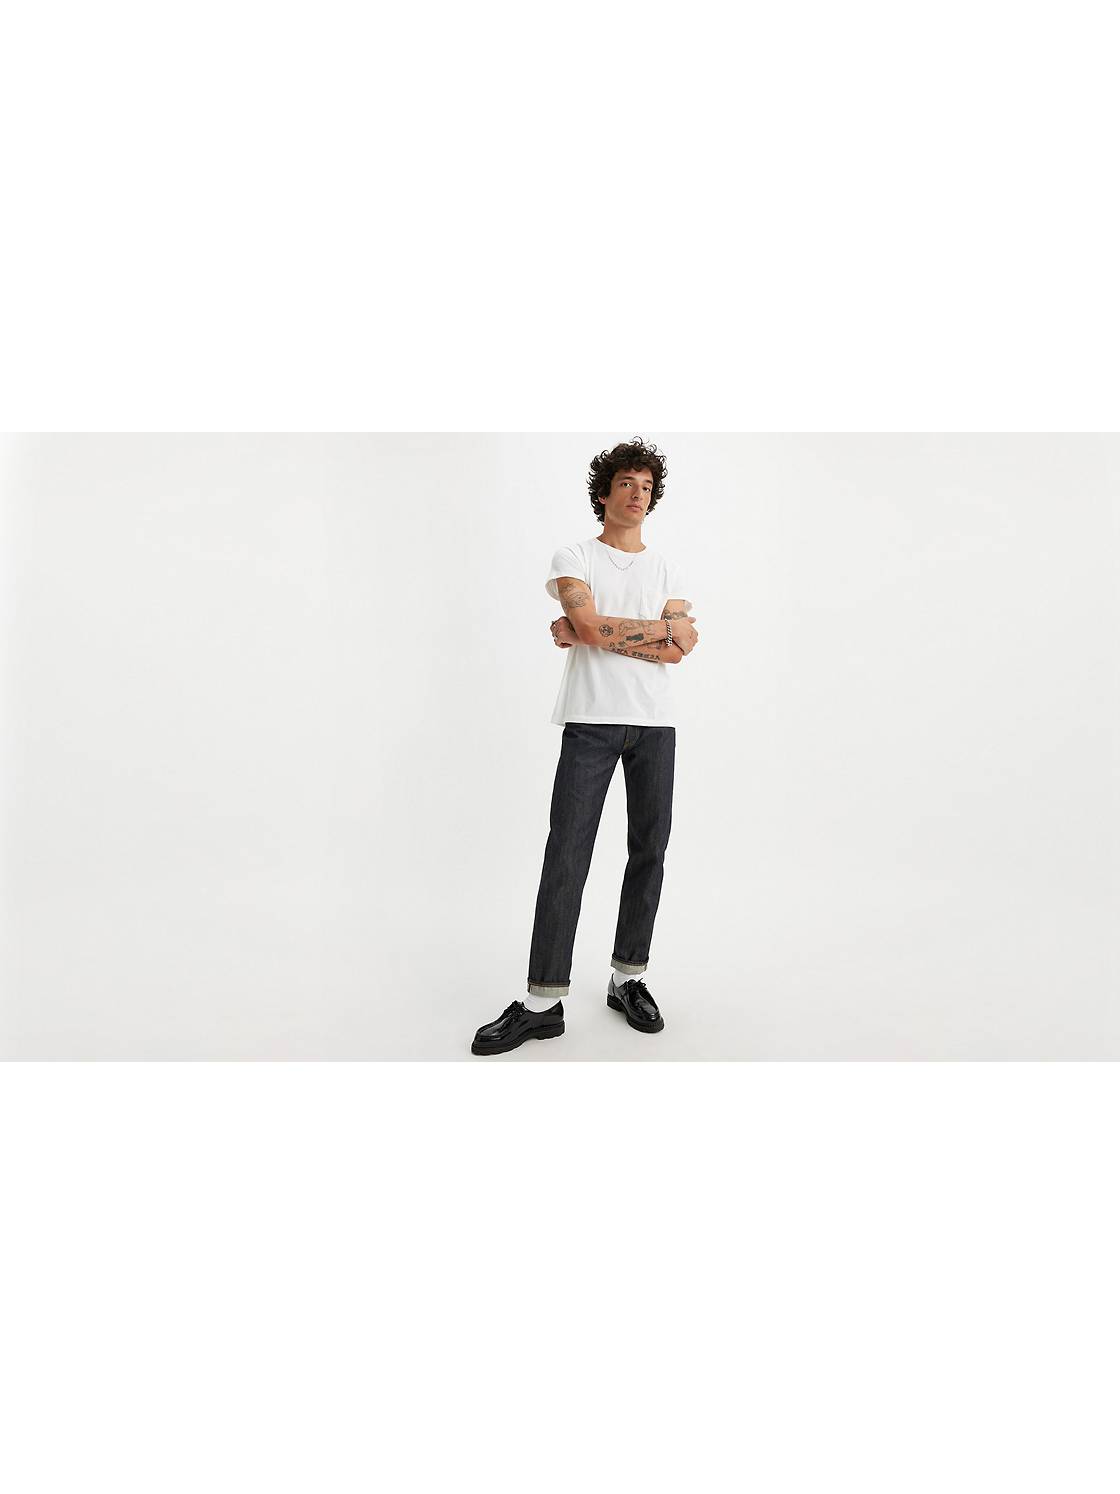 Levis Vintage Clothing Men's Slim Shirt Gray A2225-0001